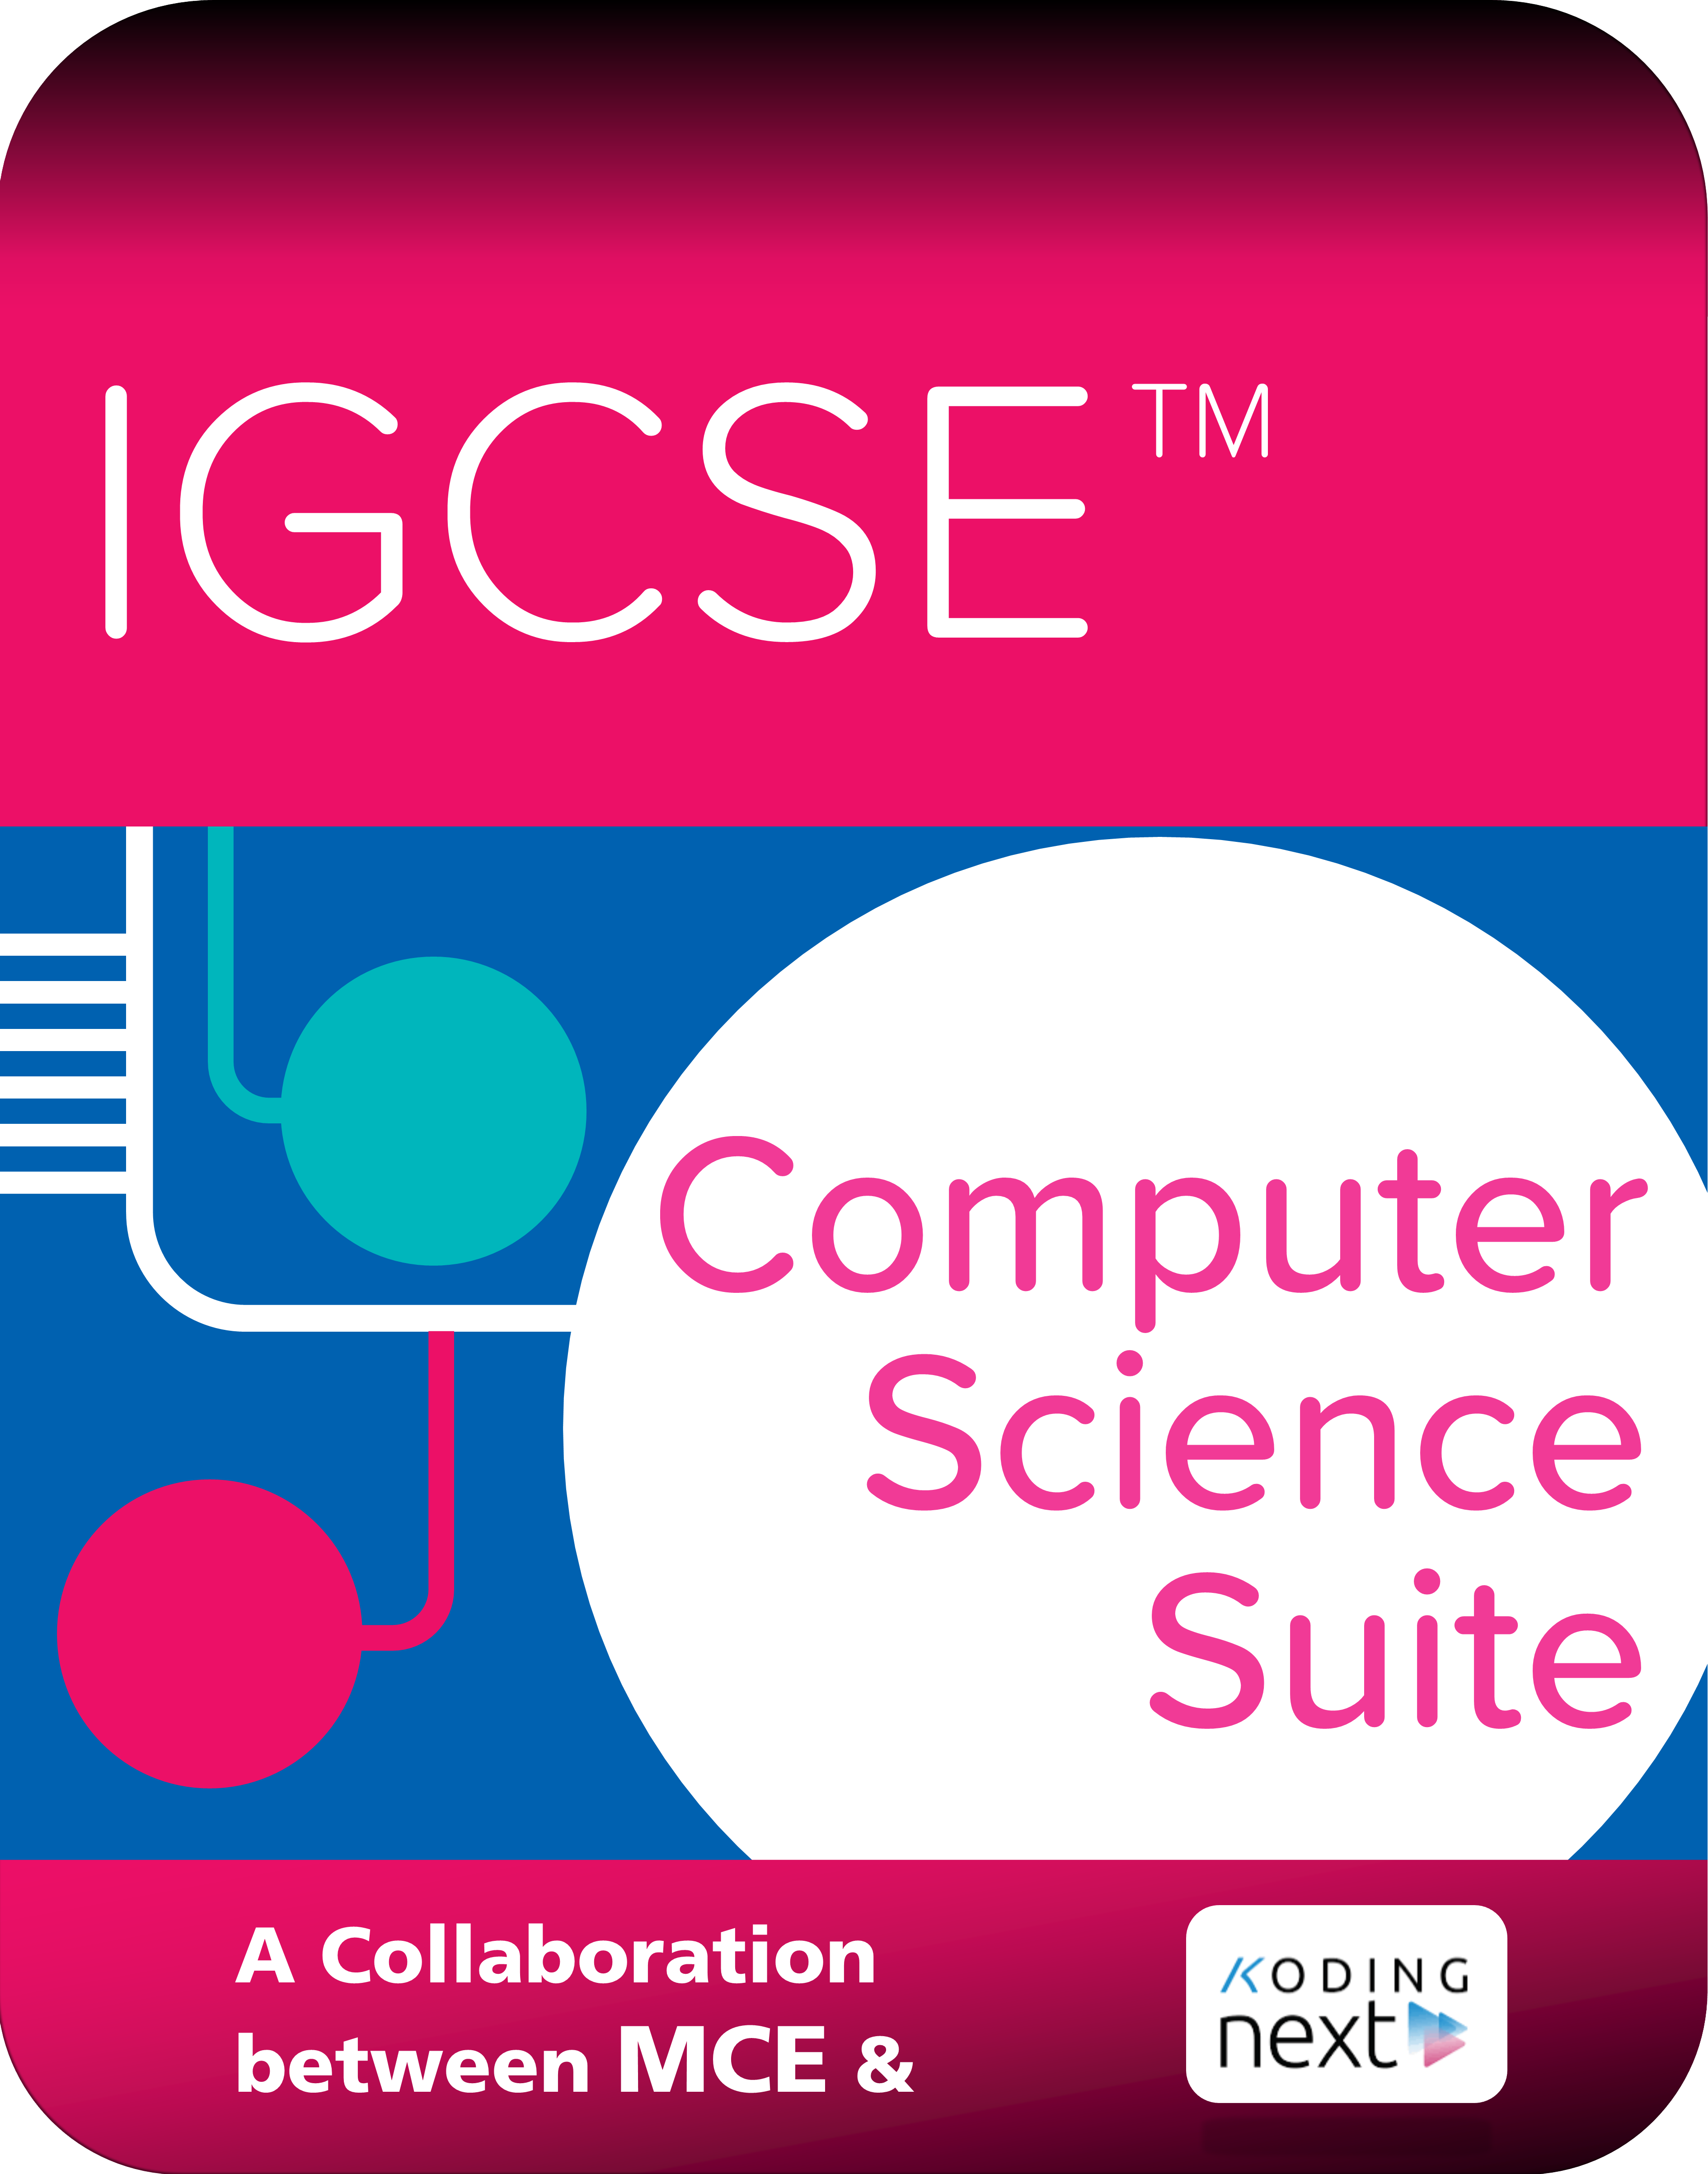 igcse computer science suite